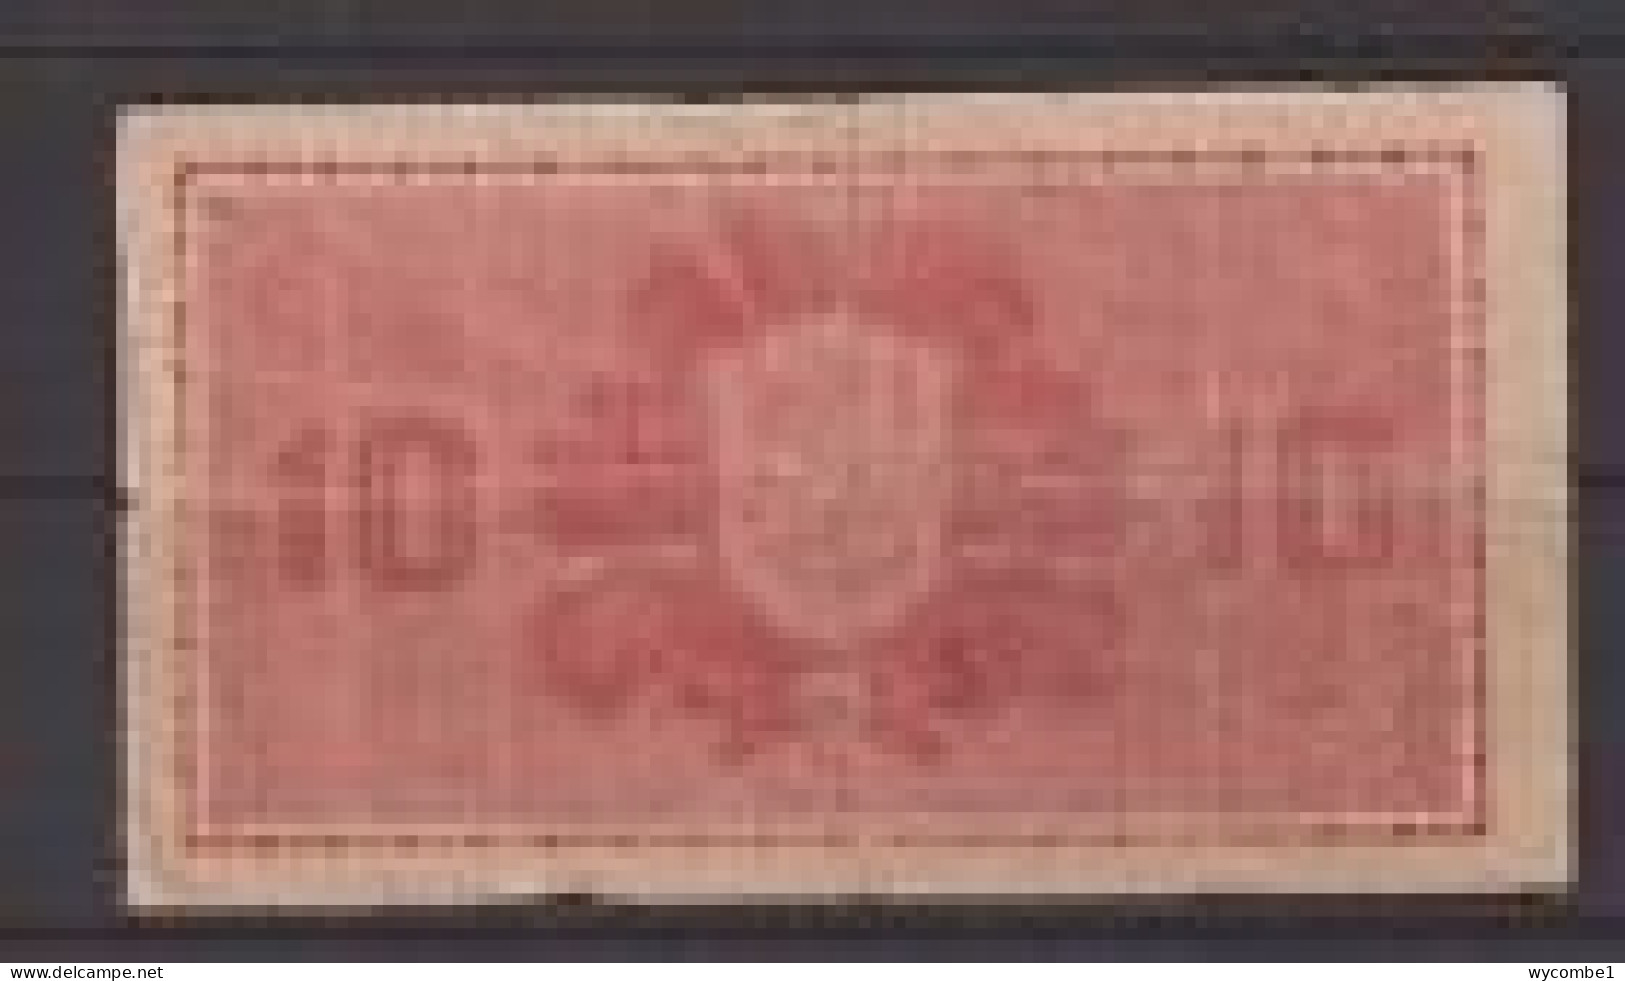 FINLAND - 1945 10 Markka Circulated Banknote - Finland